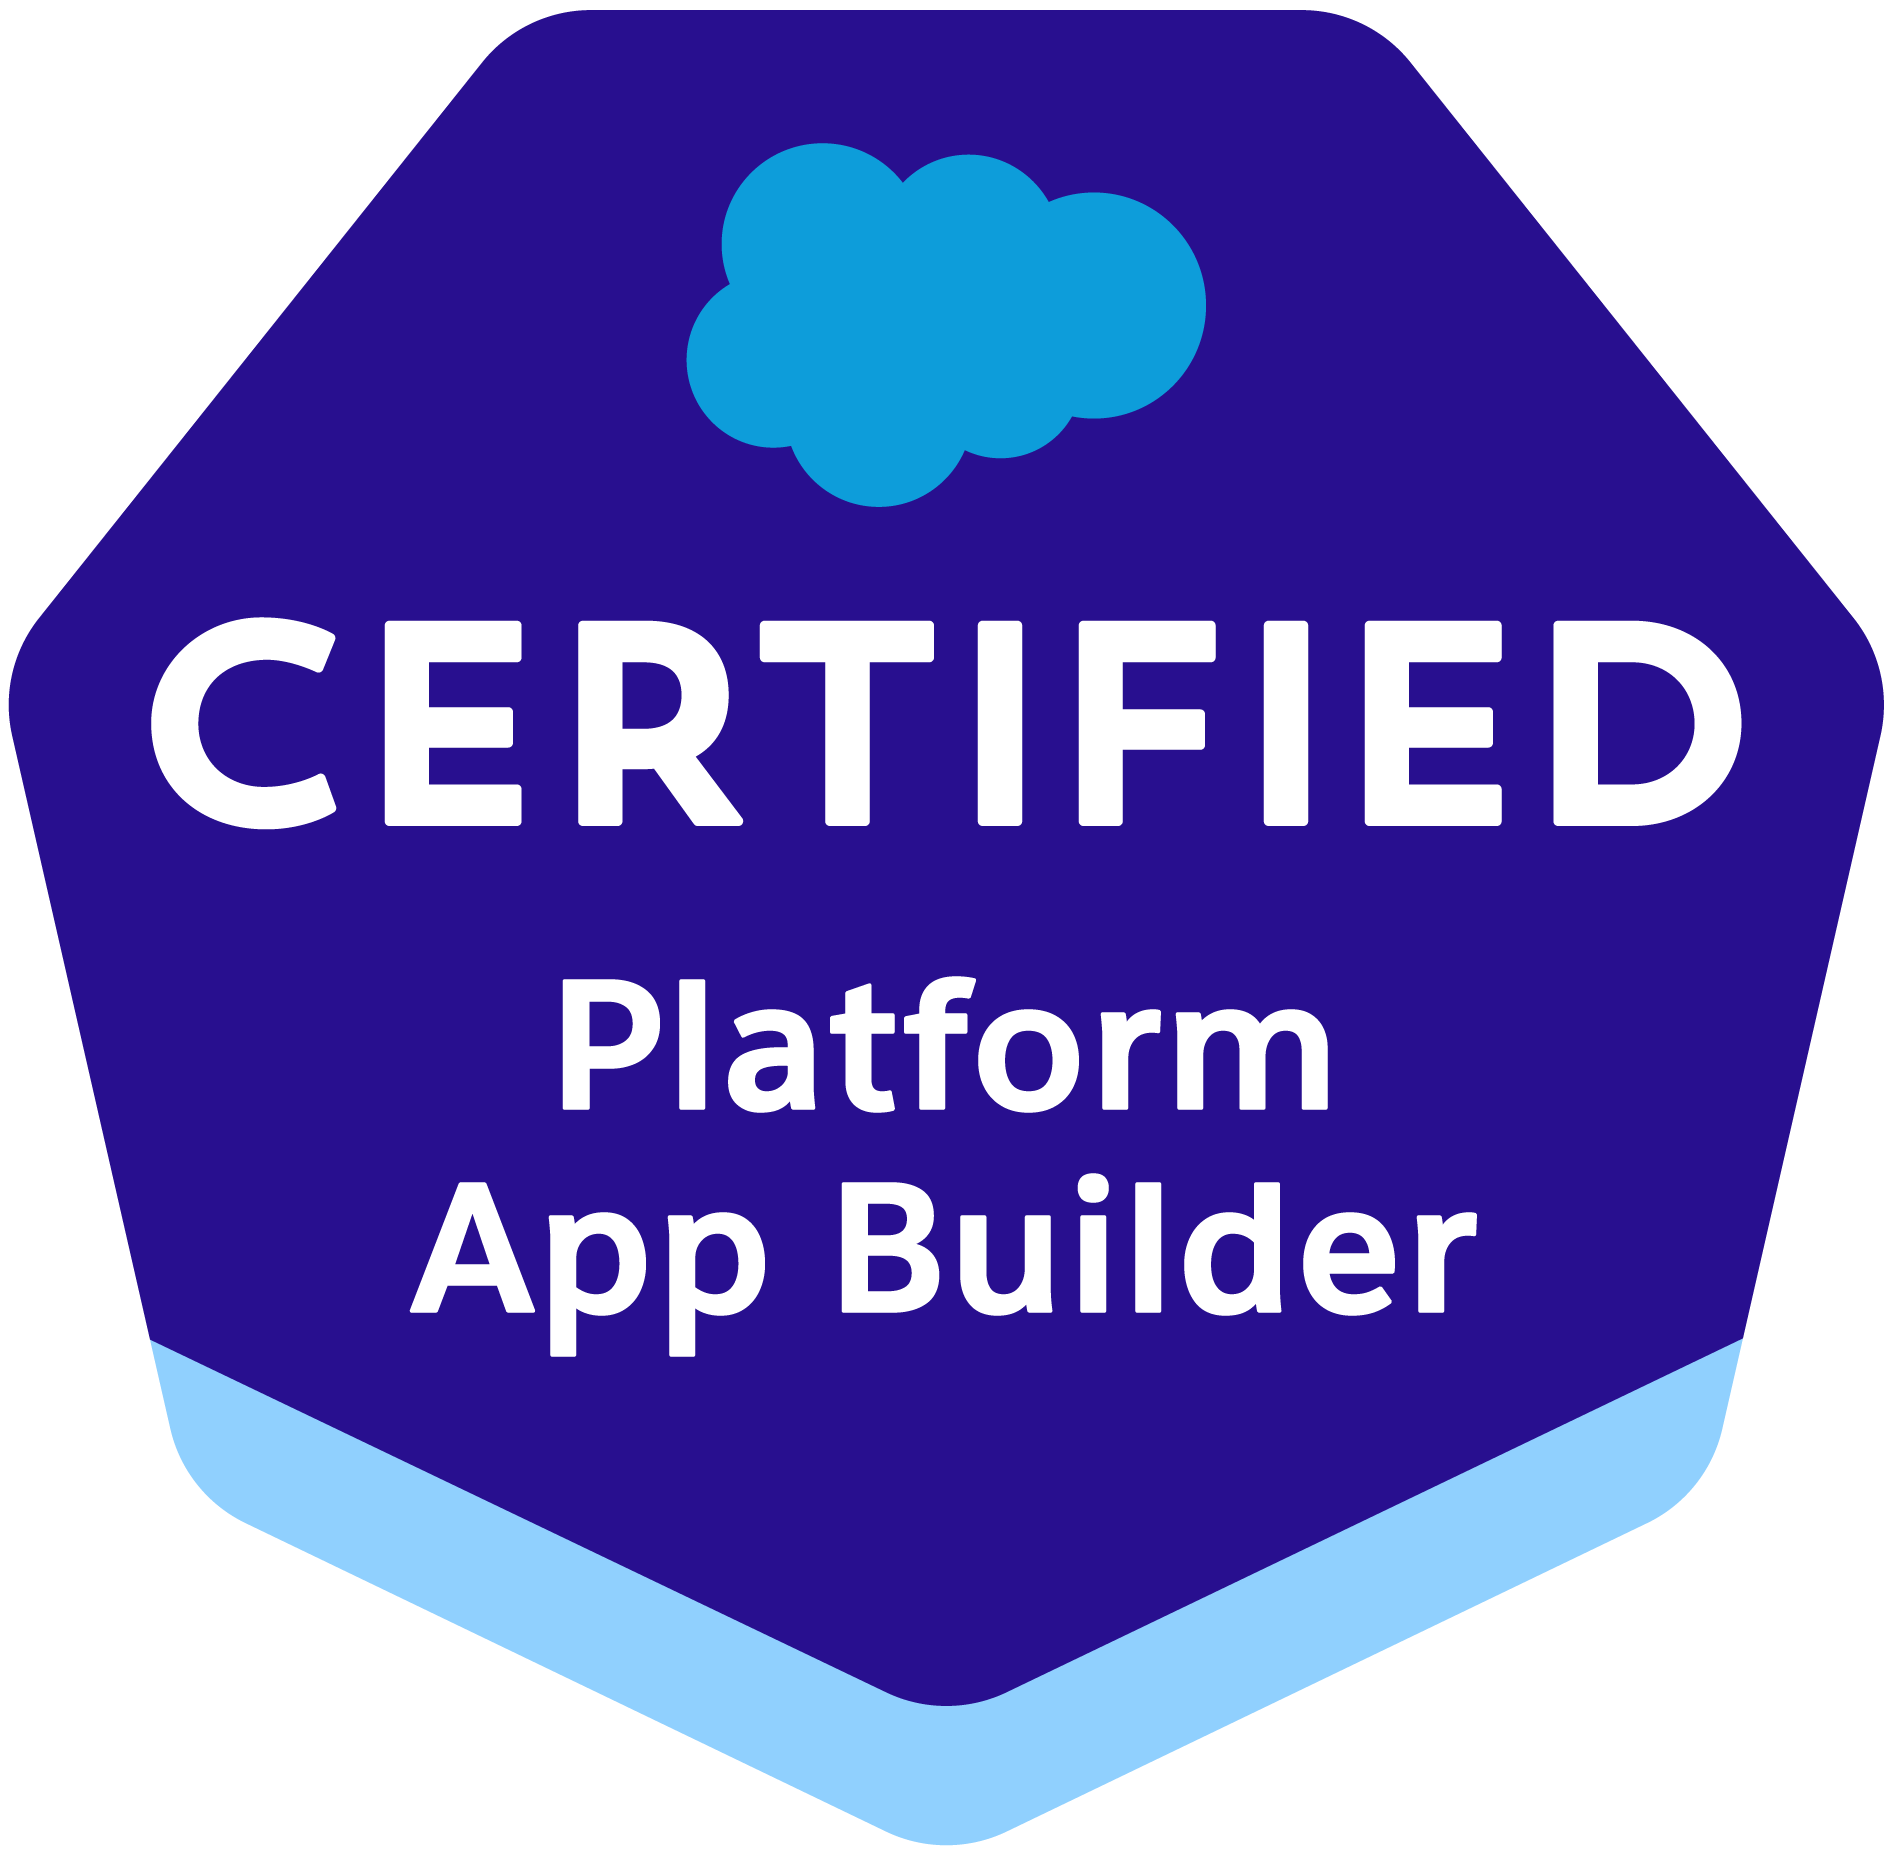 platform app builder cert logo